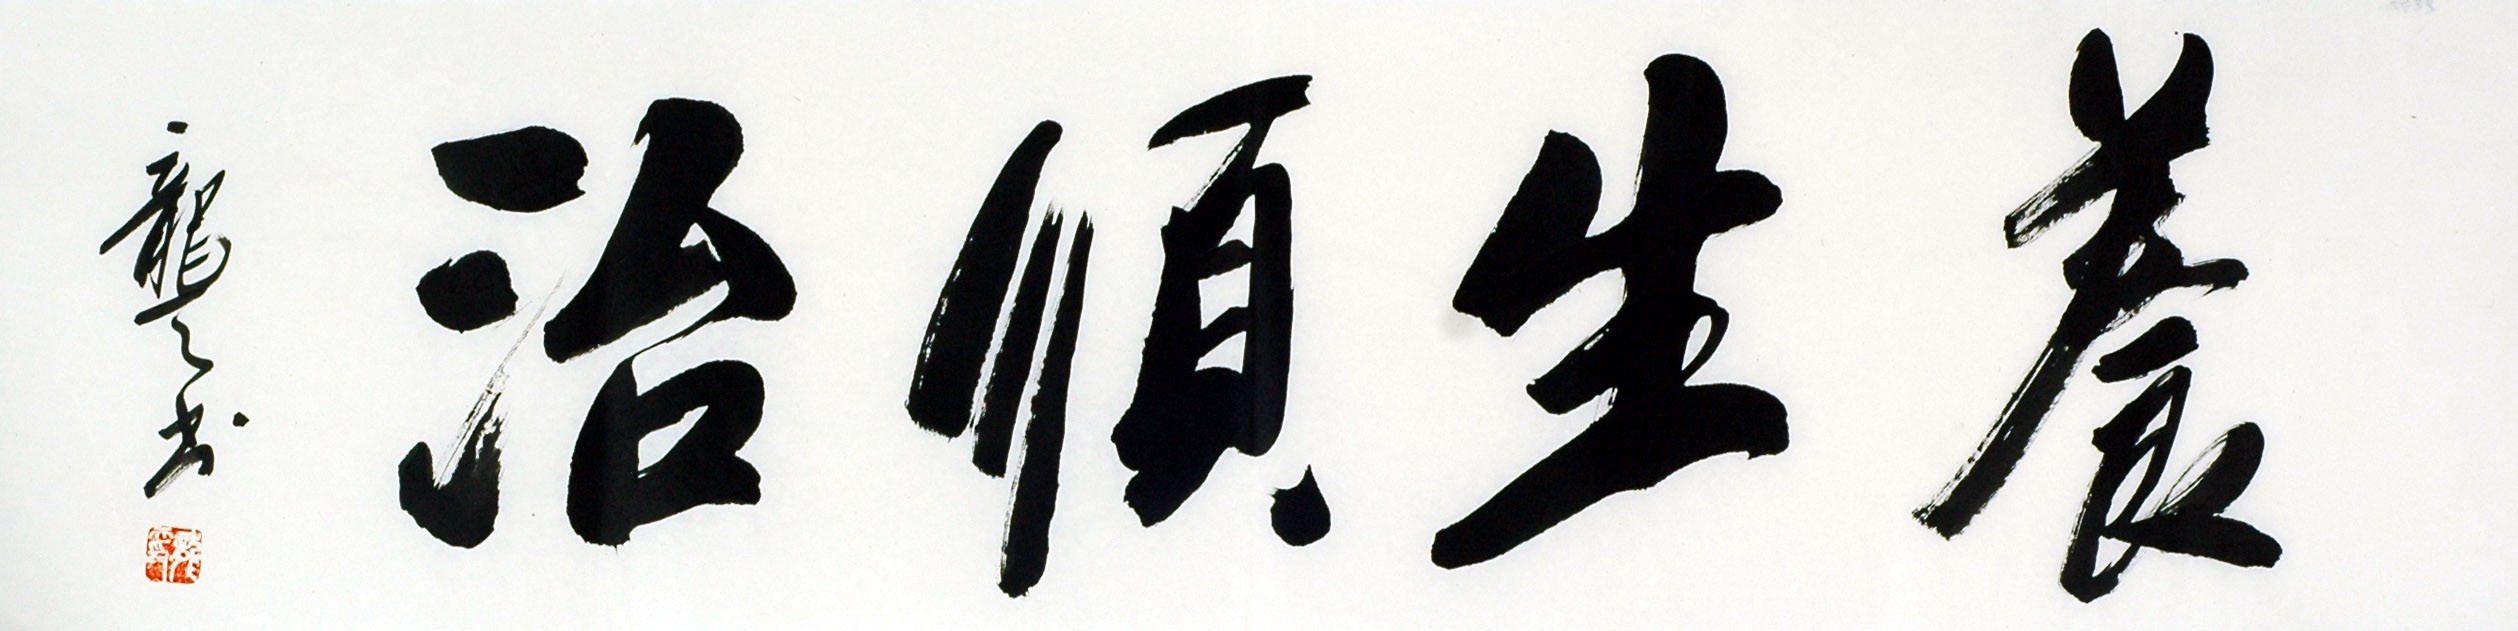 Chinese Cursive Scripts Painting - CNAG011051